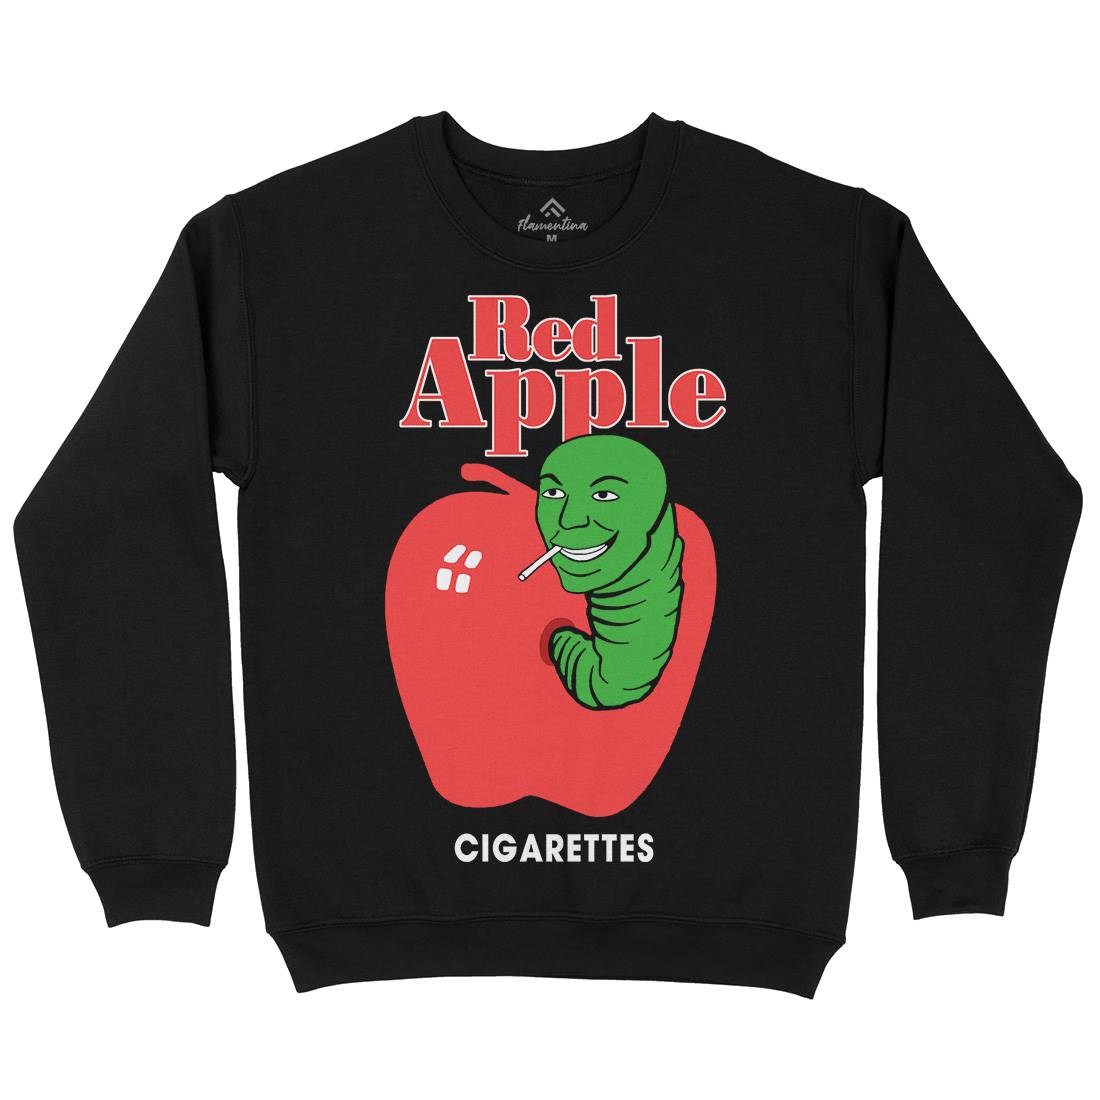 Red Apple Cigarettes Kids Crew Neck Sweatshirt Retro D211